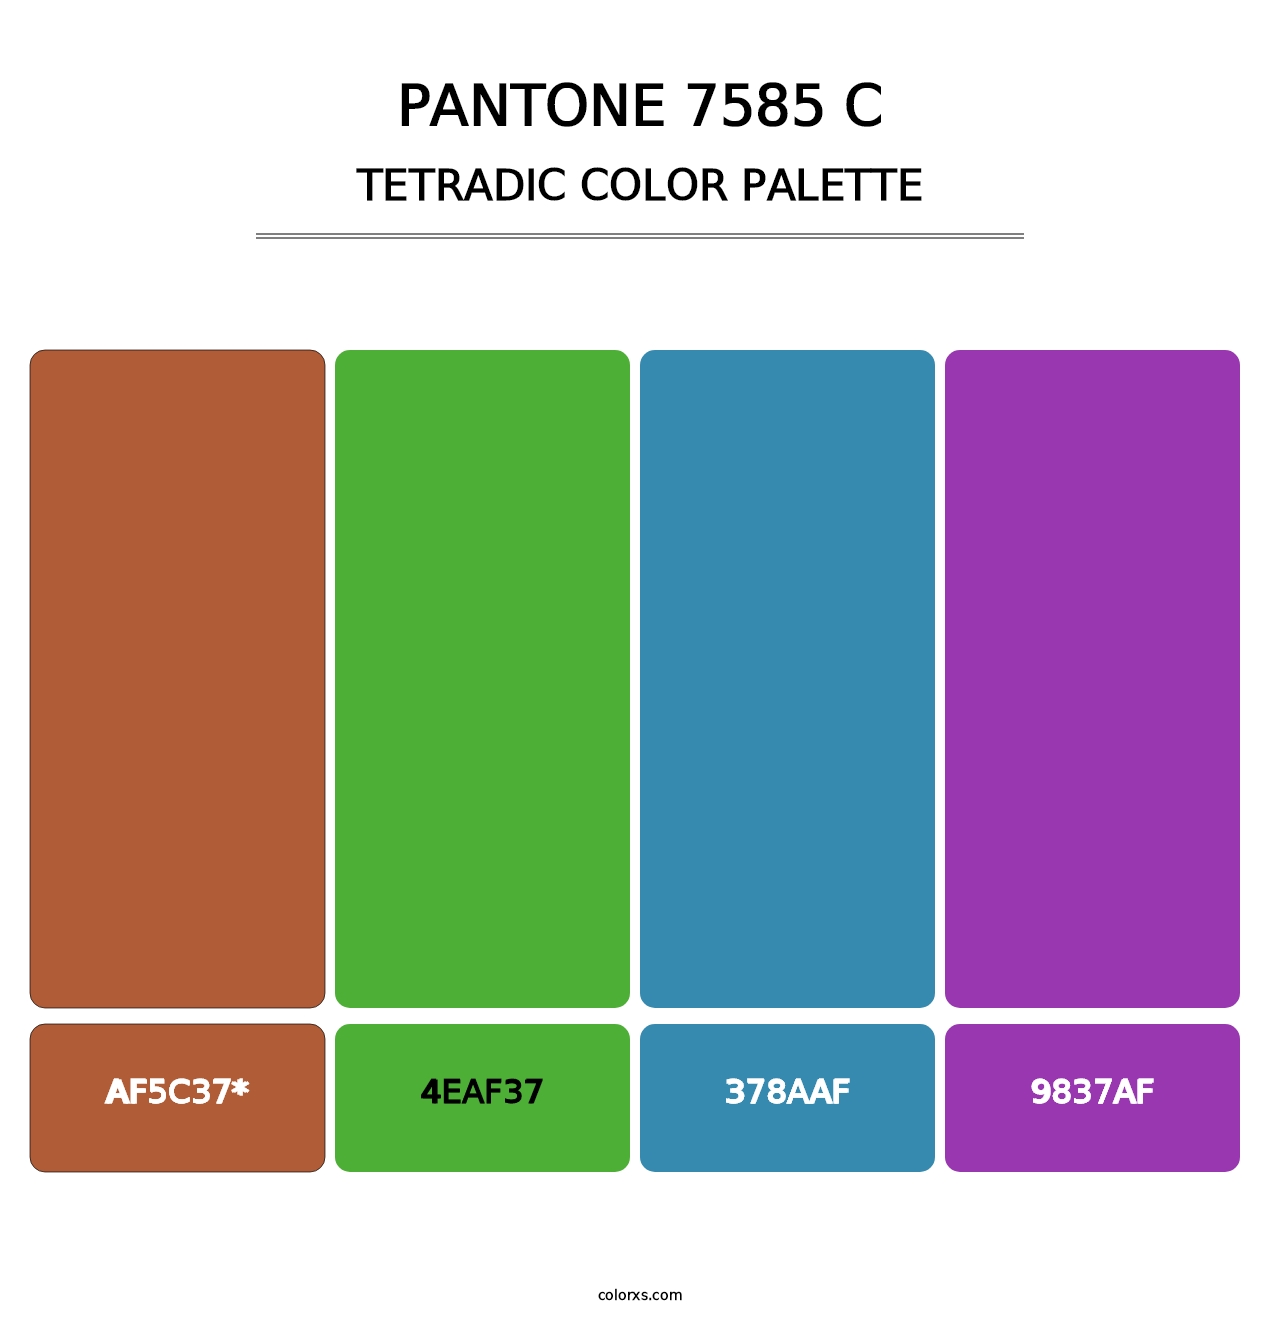 PANTONE 7585 C - Tetradic Color Palette